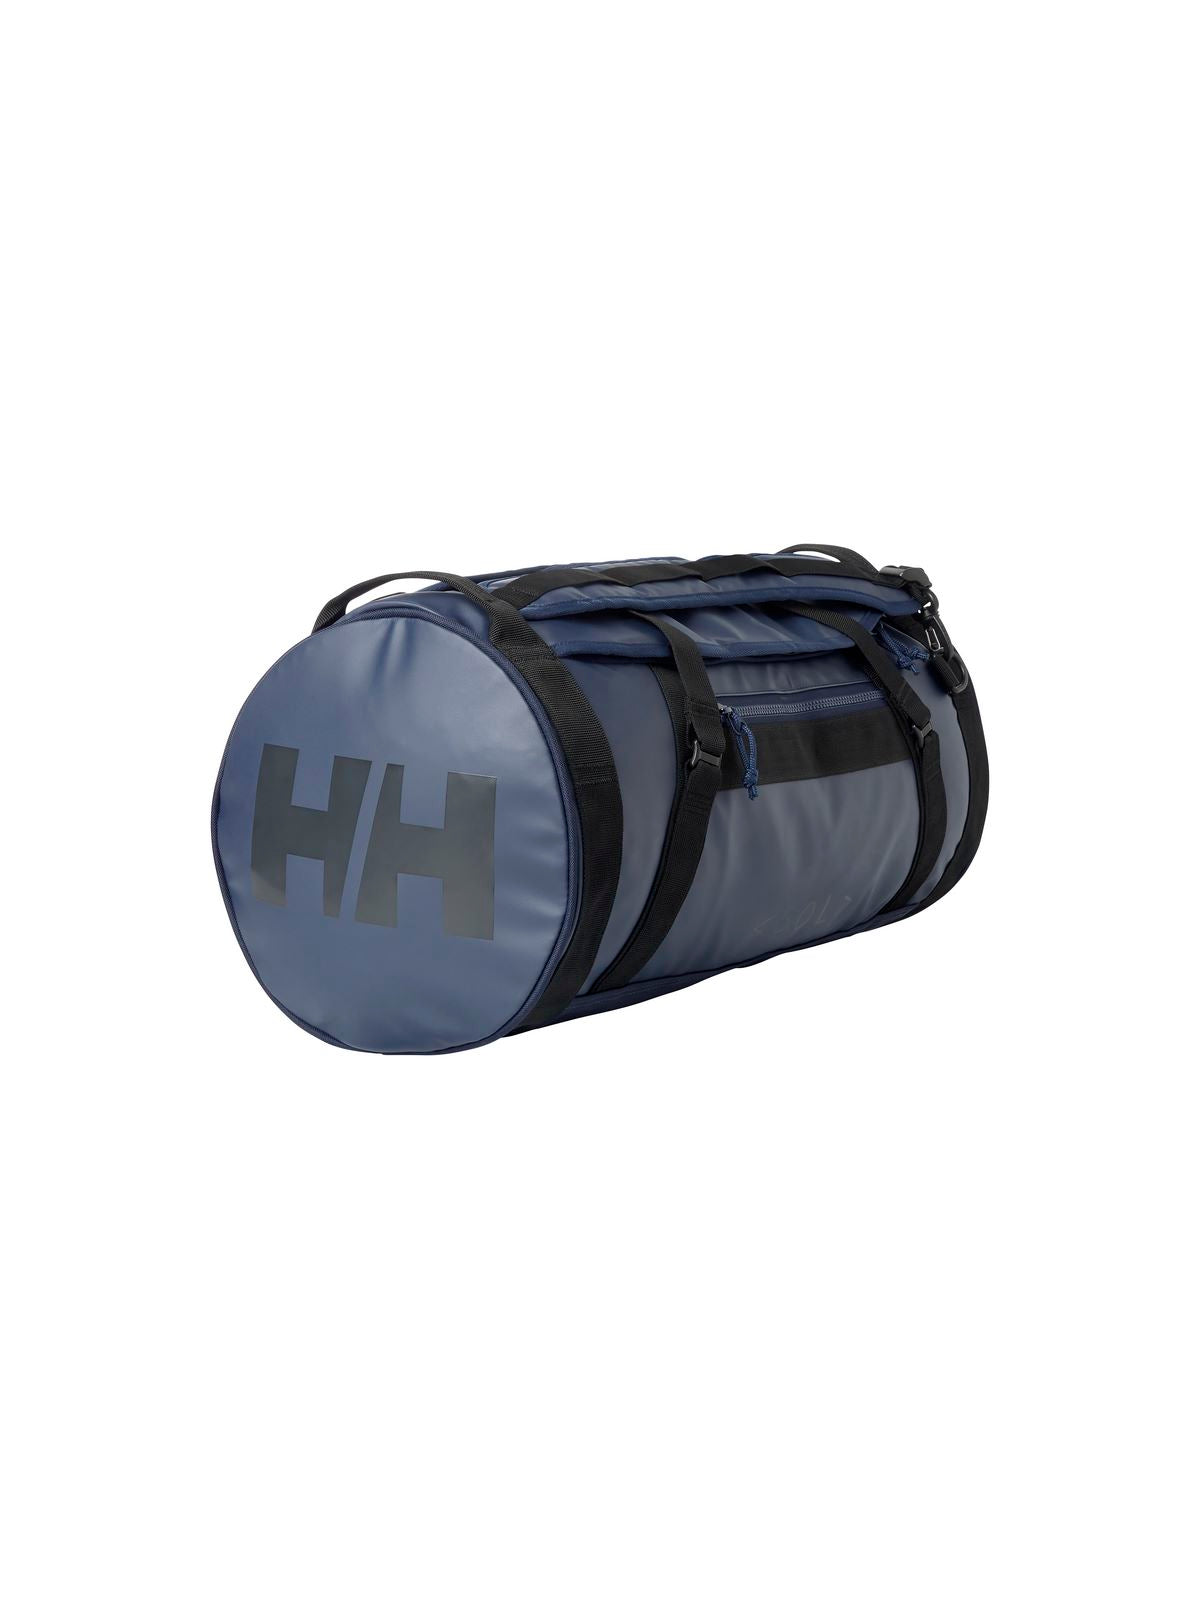 Torba Helly Hansen Hh Duffel Bag 2 50L niebieski